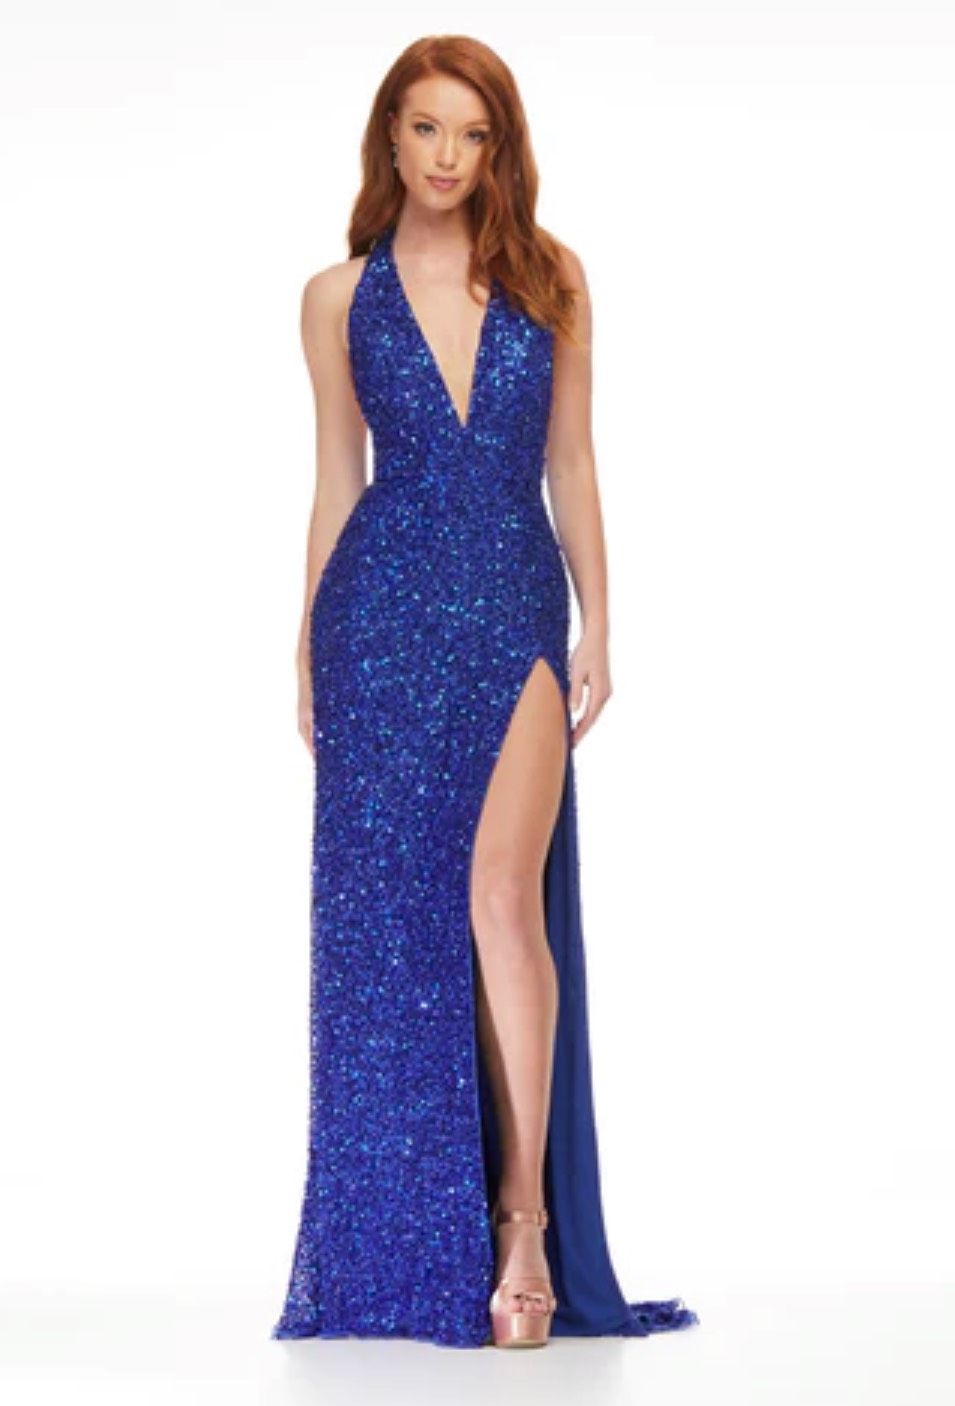 Ashley Lauren Size 6 Pageant Halter Sequined Blue Side Slit Dress on Queenly